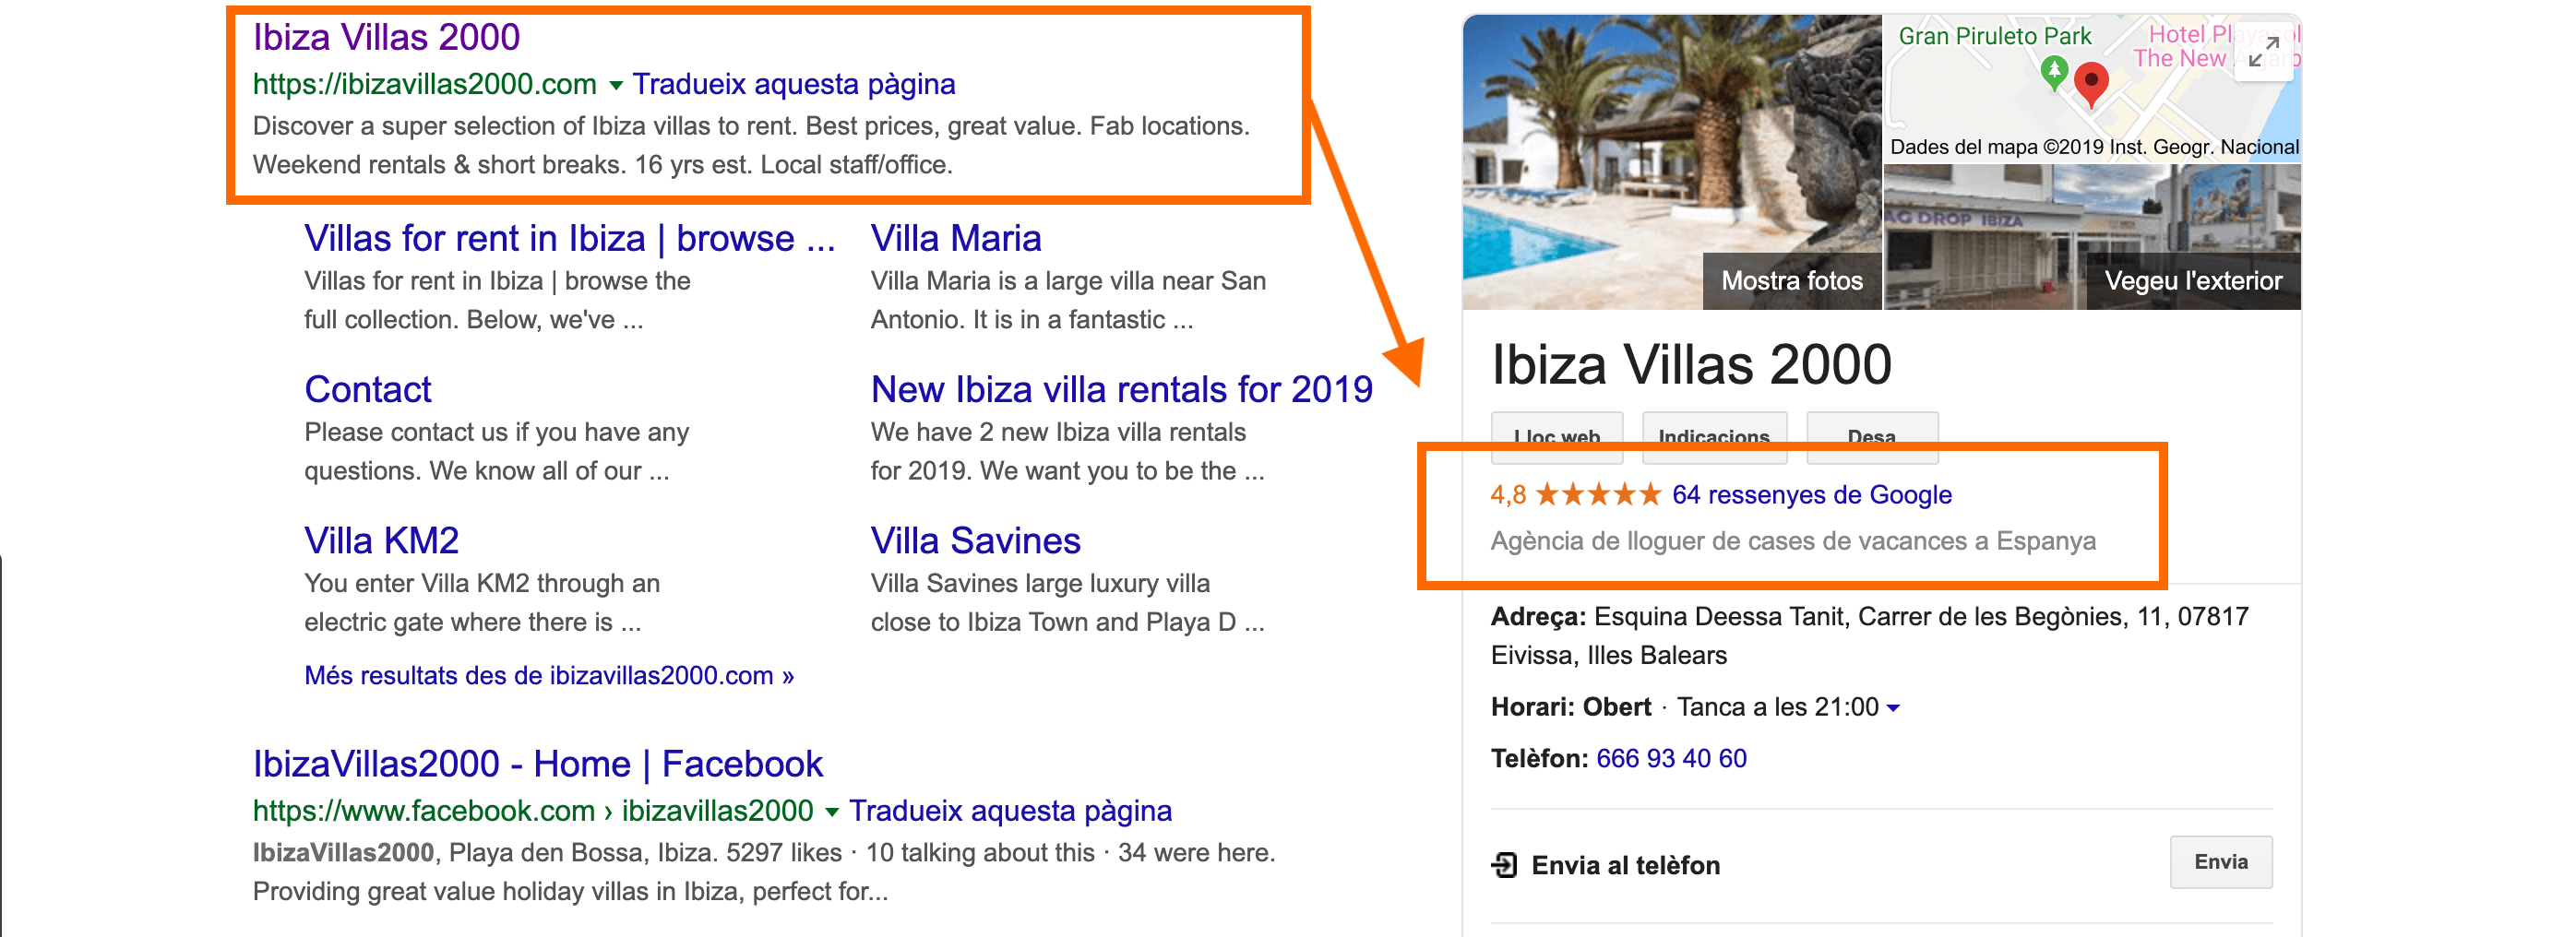 Renting villas in Ibiza | 7 common pitfalls